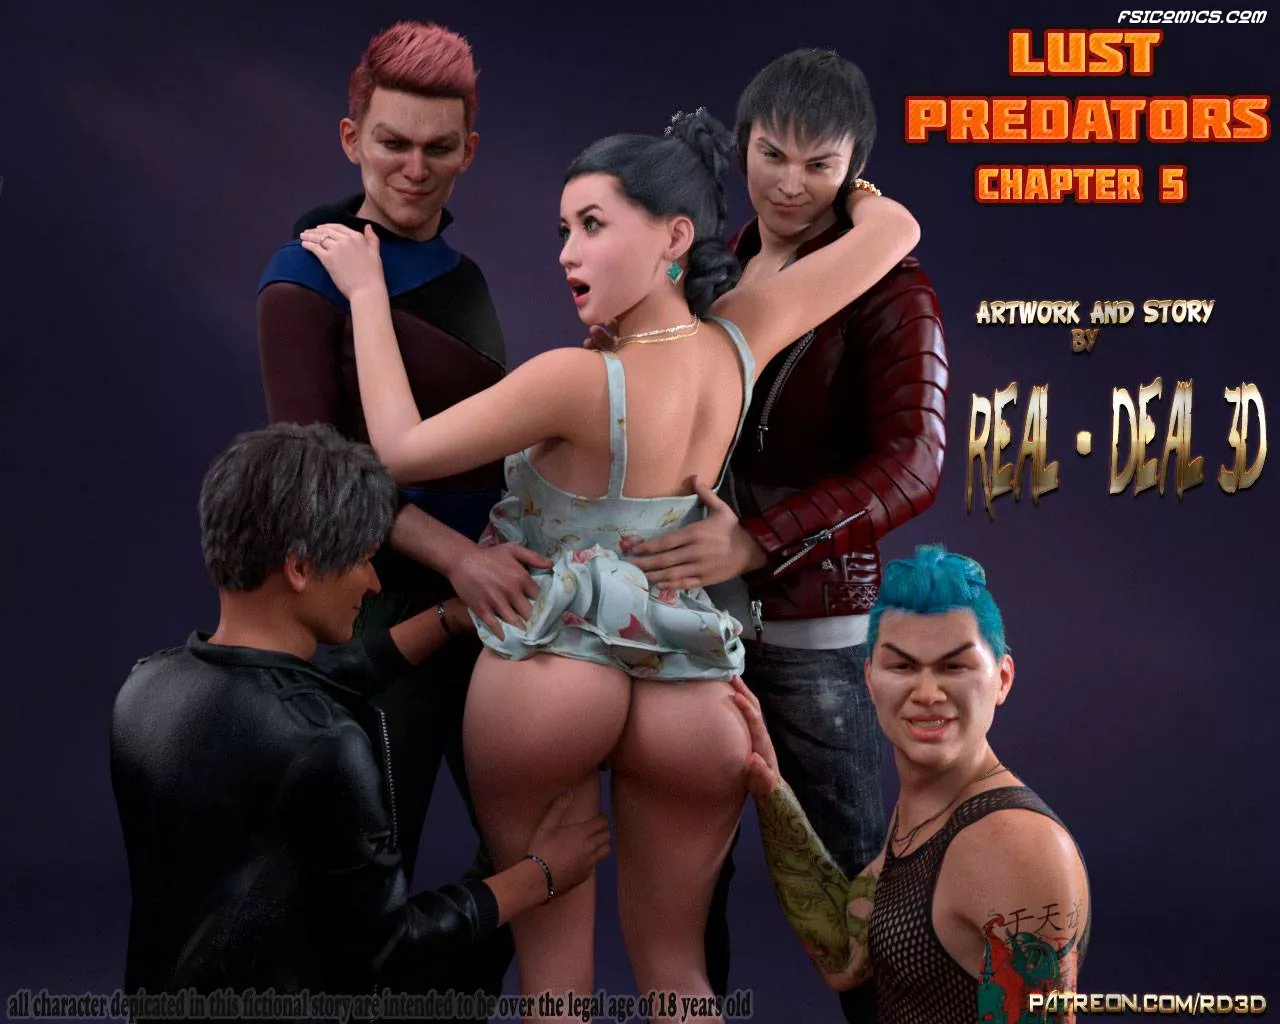 Lust Predators Chapter 5 - Real Deal 3D - 213 - FSIComics